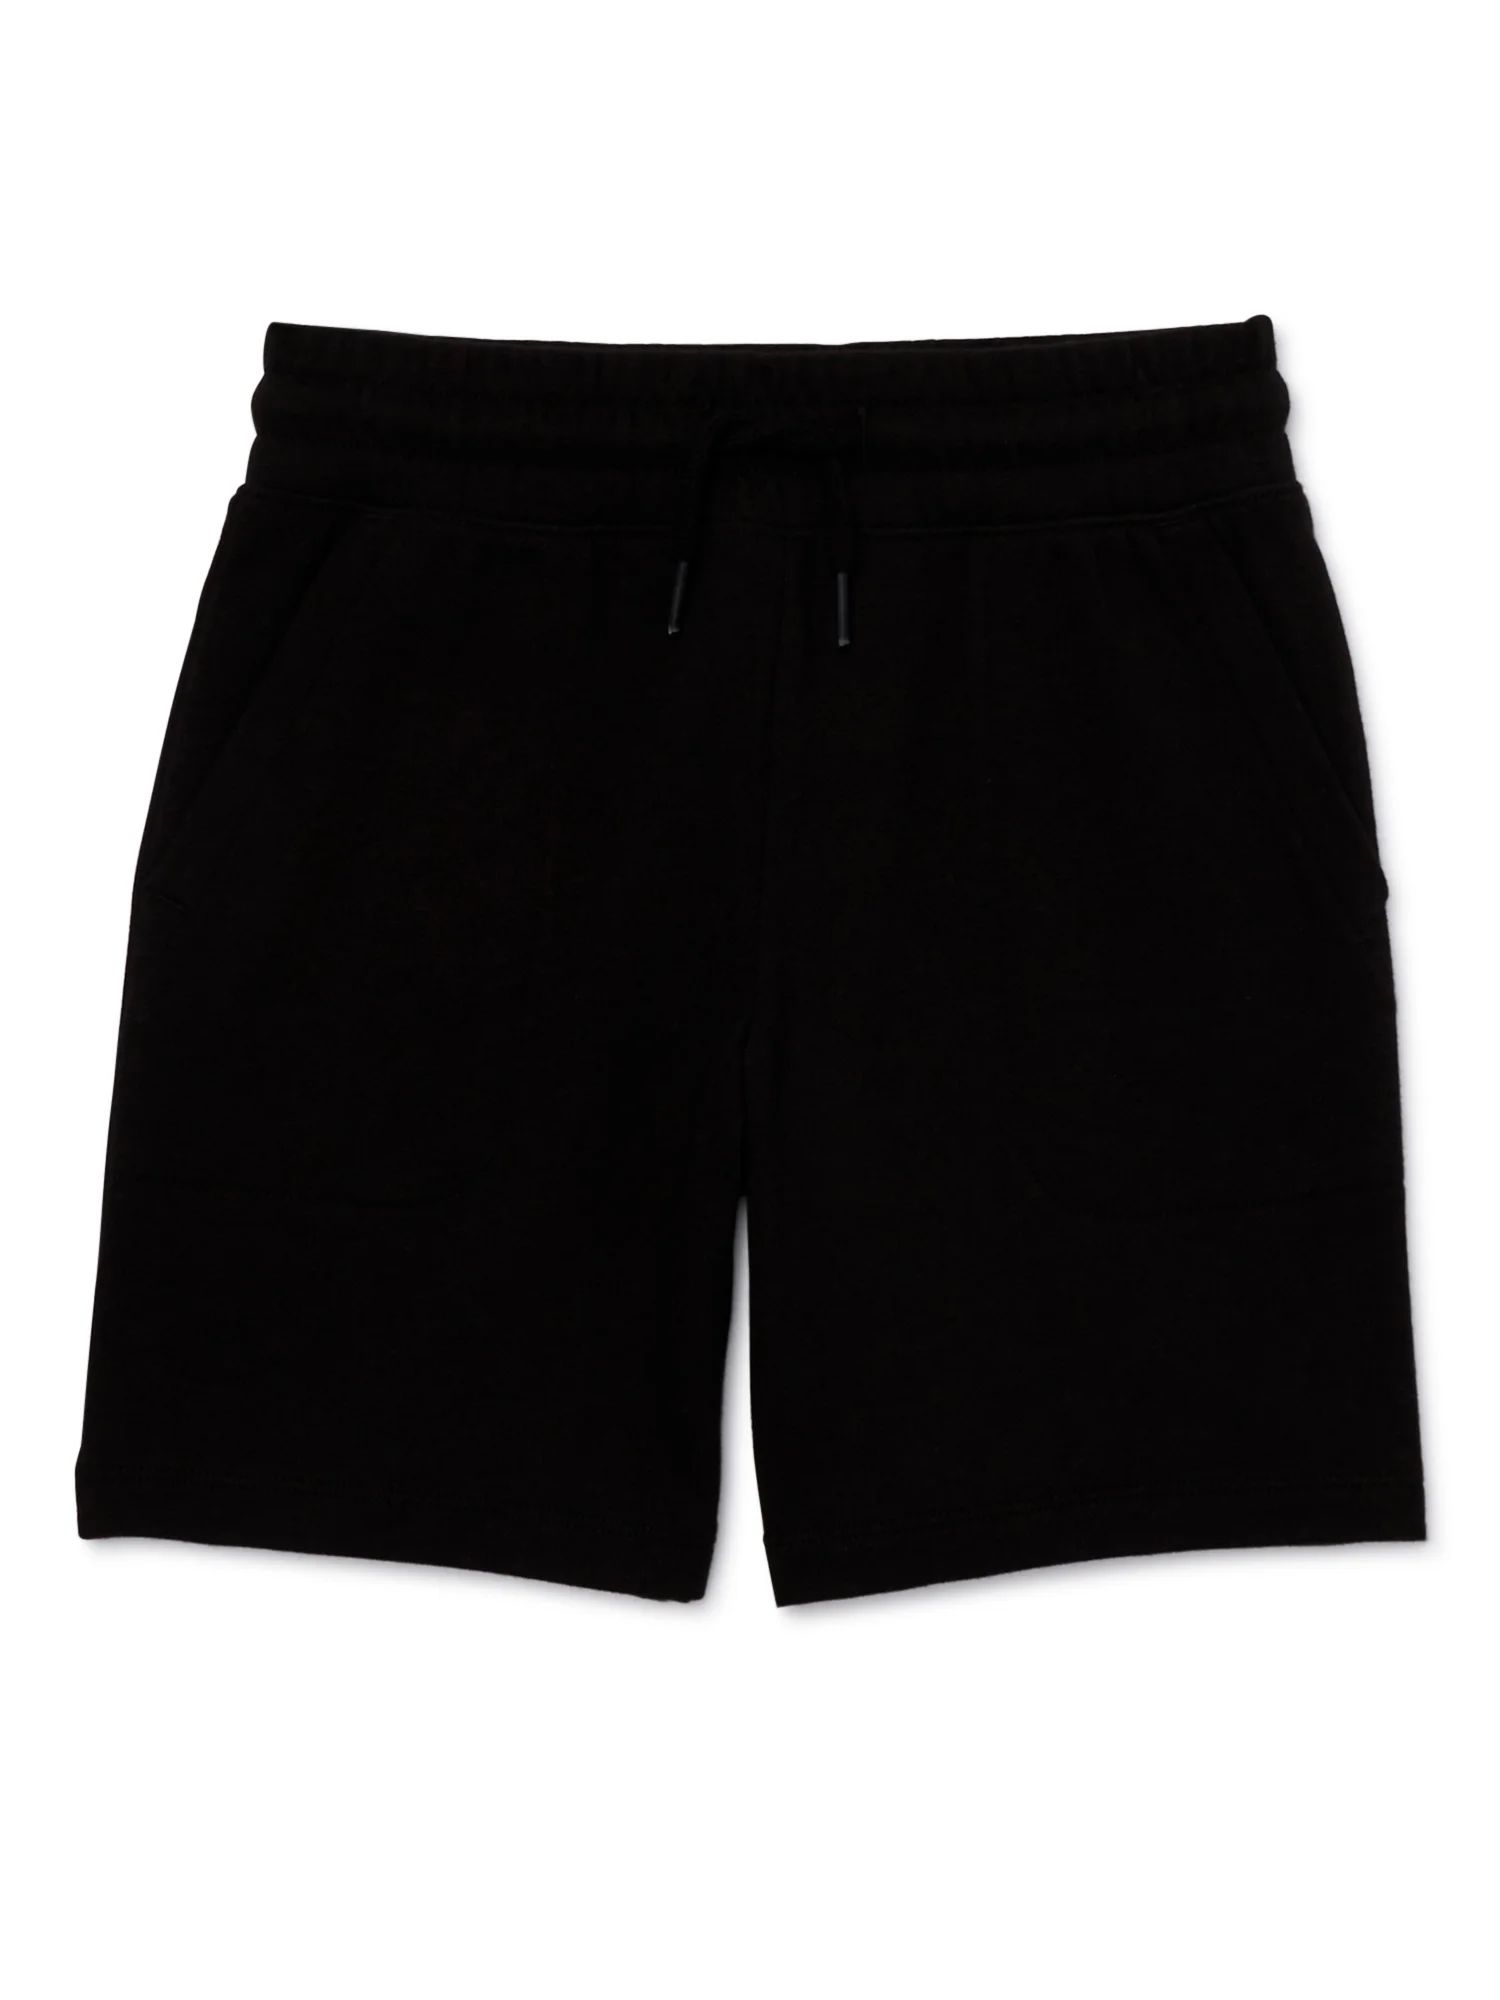 Wonder Nation Boys French Terry Cloth Shorts, Sizes 4-18 & Husky | Walmart (US)